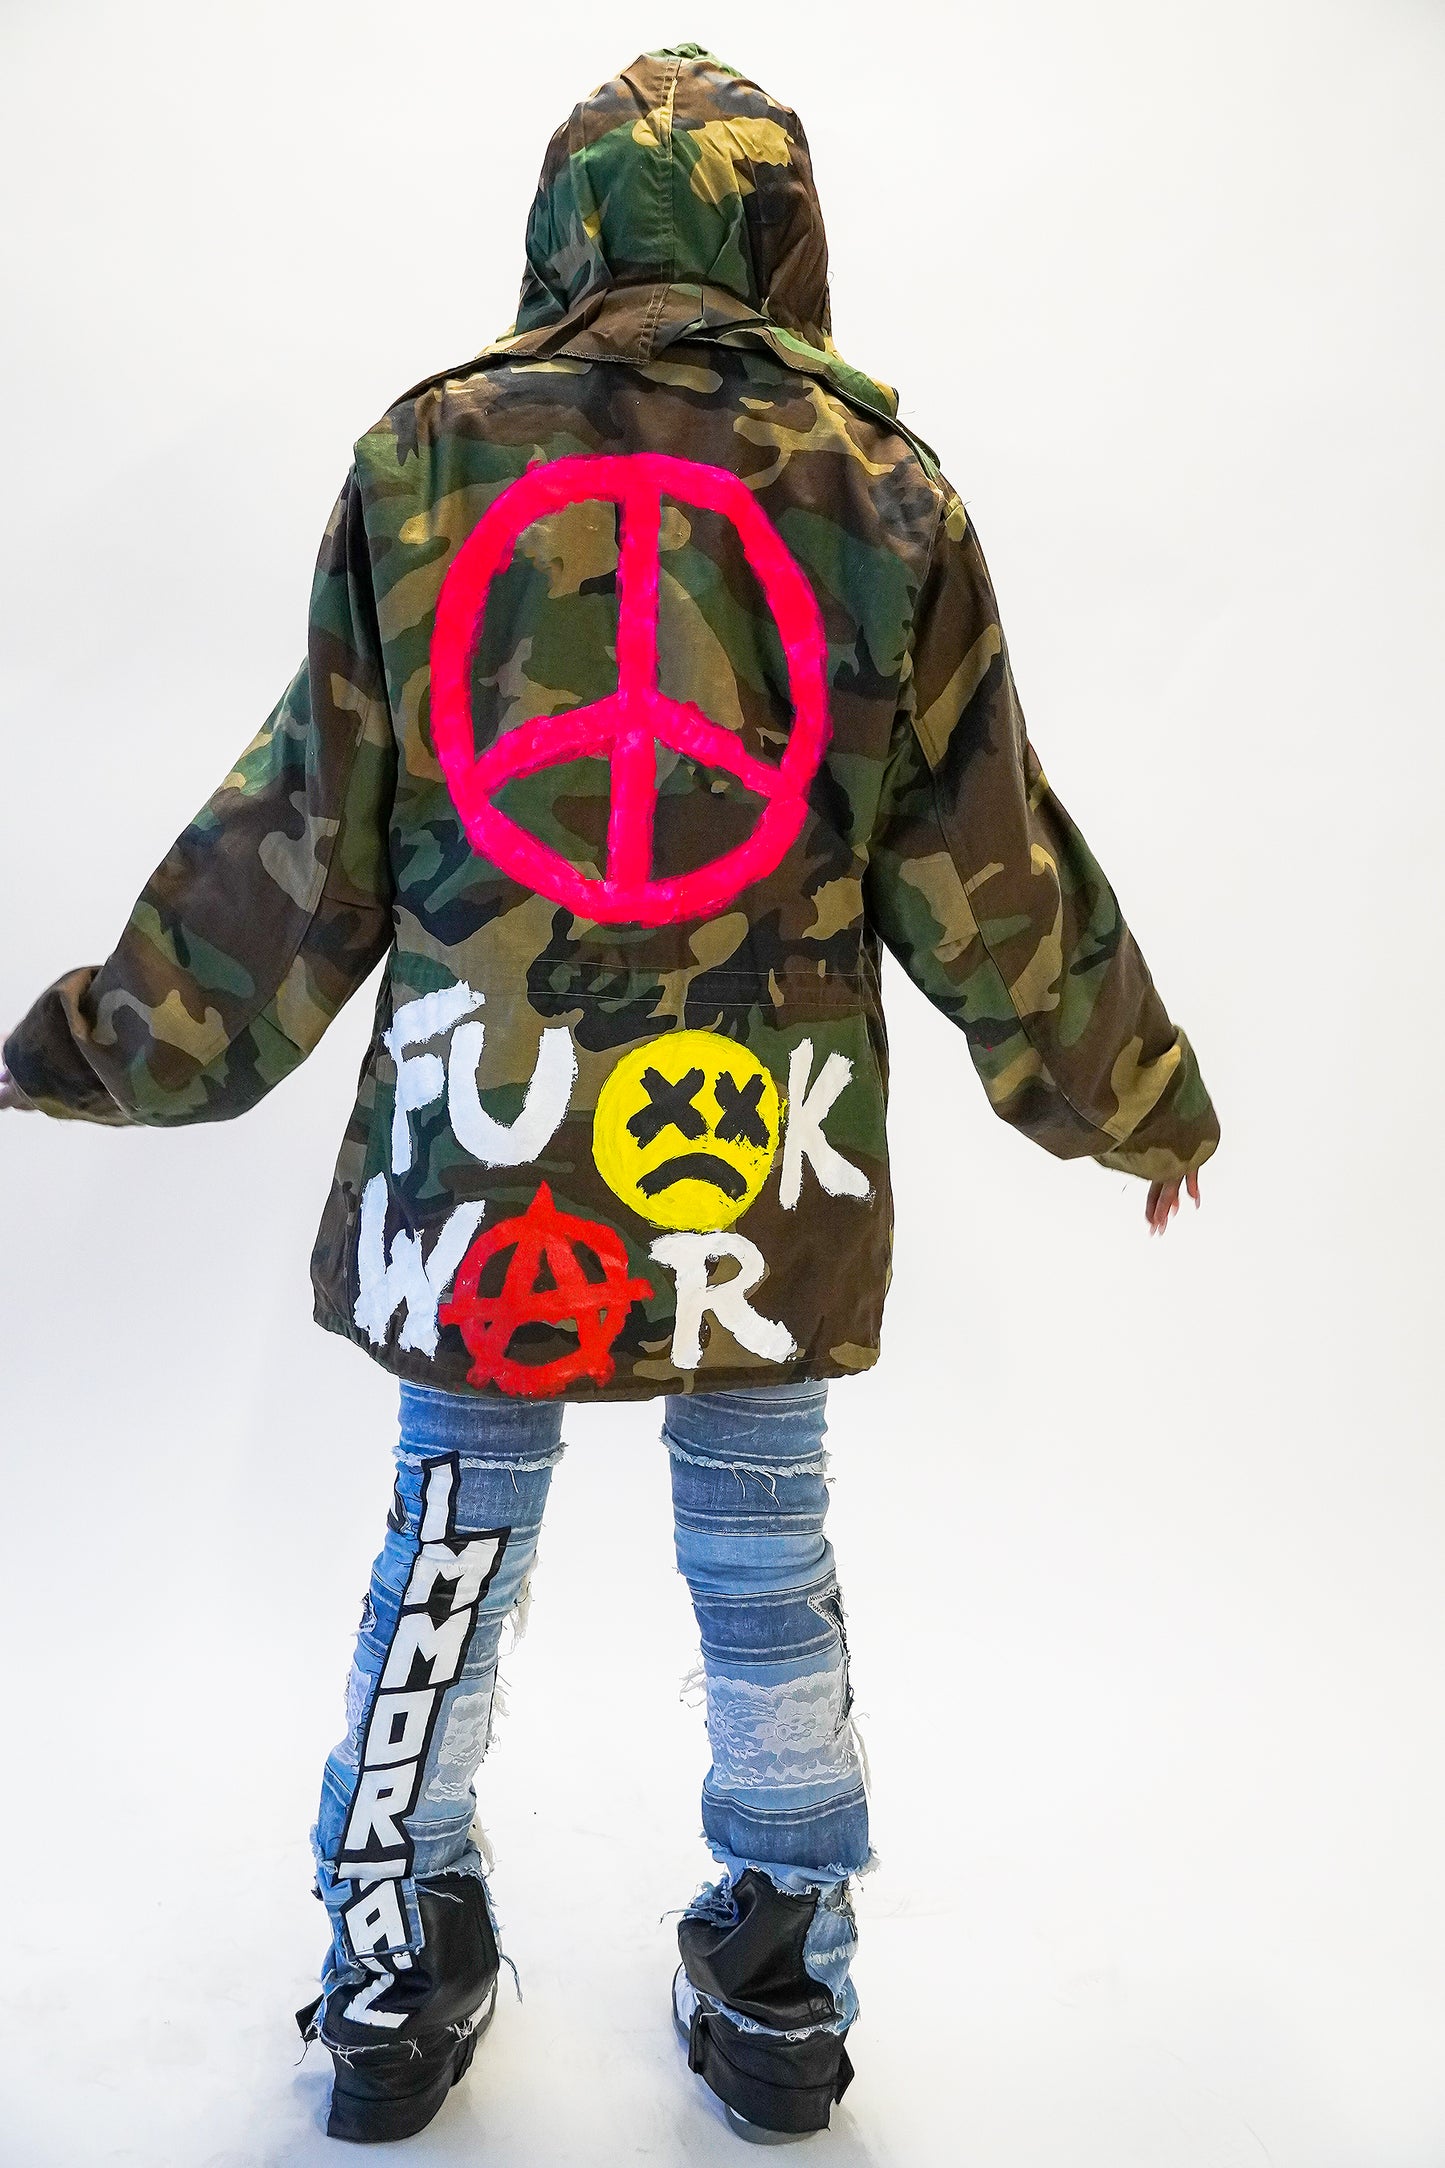 Camo "F*ck War" Jacket